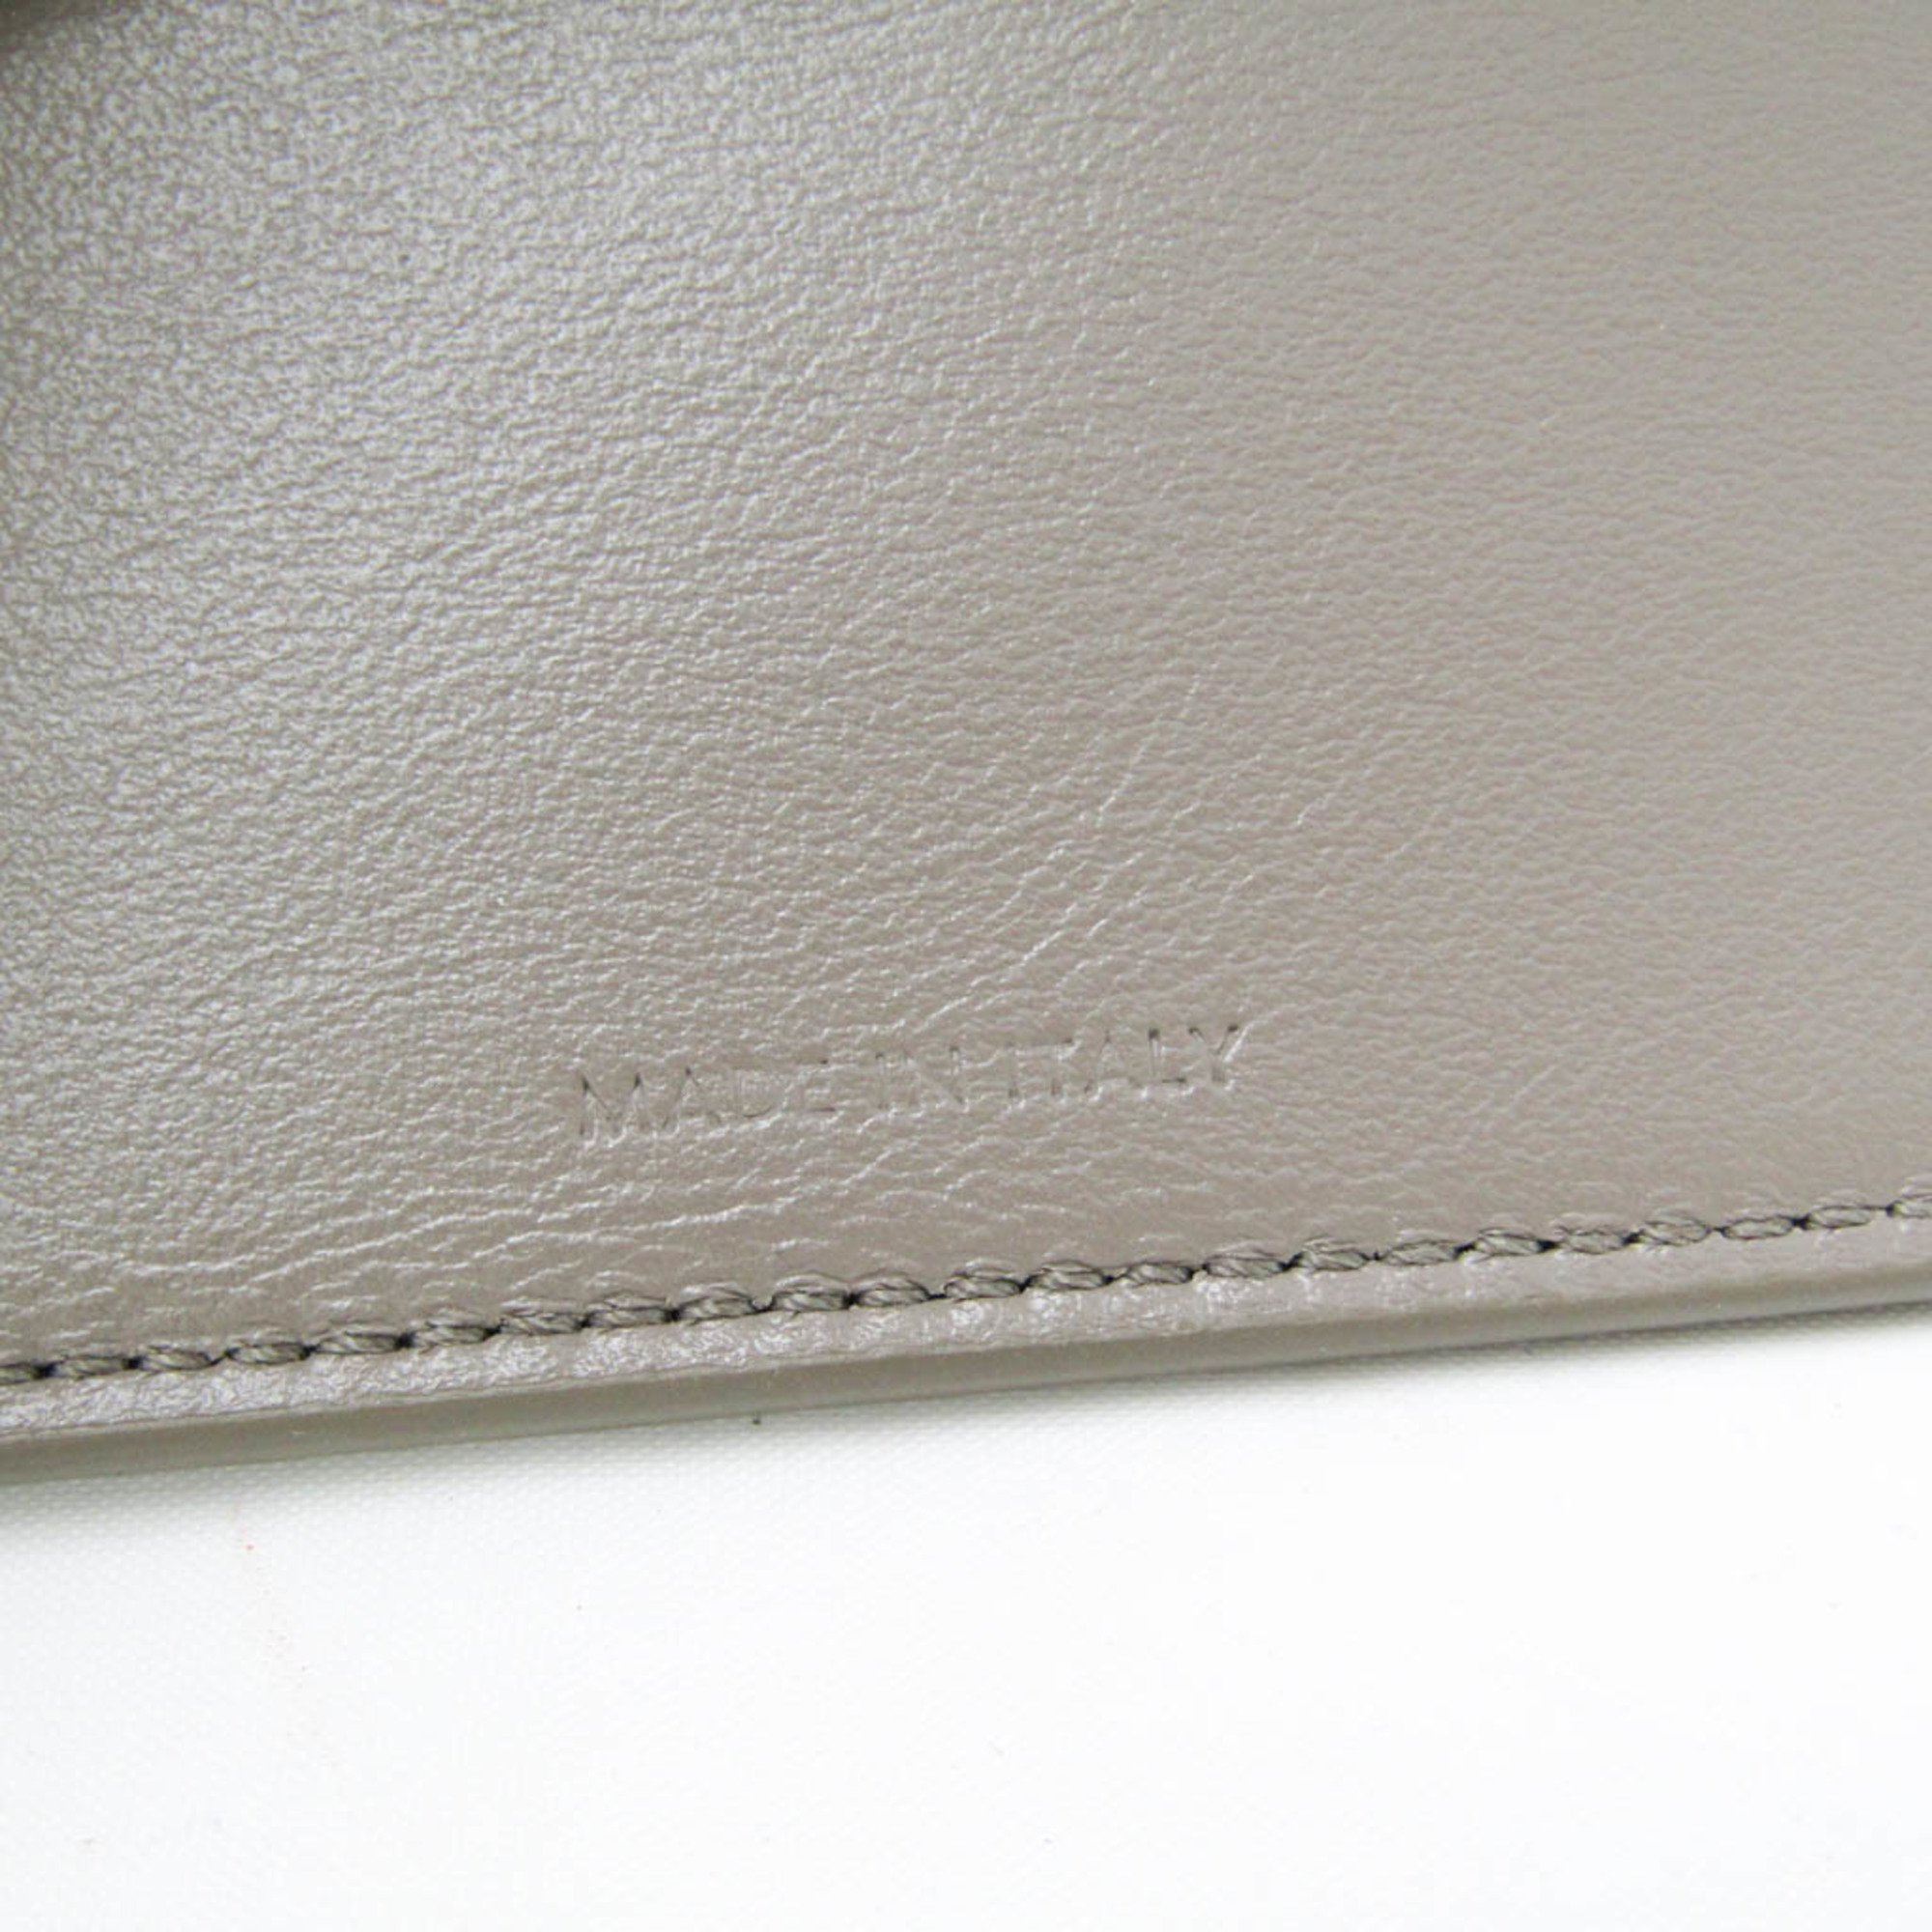 Celine Small Triford Wallet 10B573 Women's  Calfskin Wallet (tri-fold) Grayish